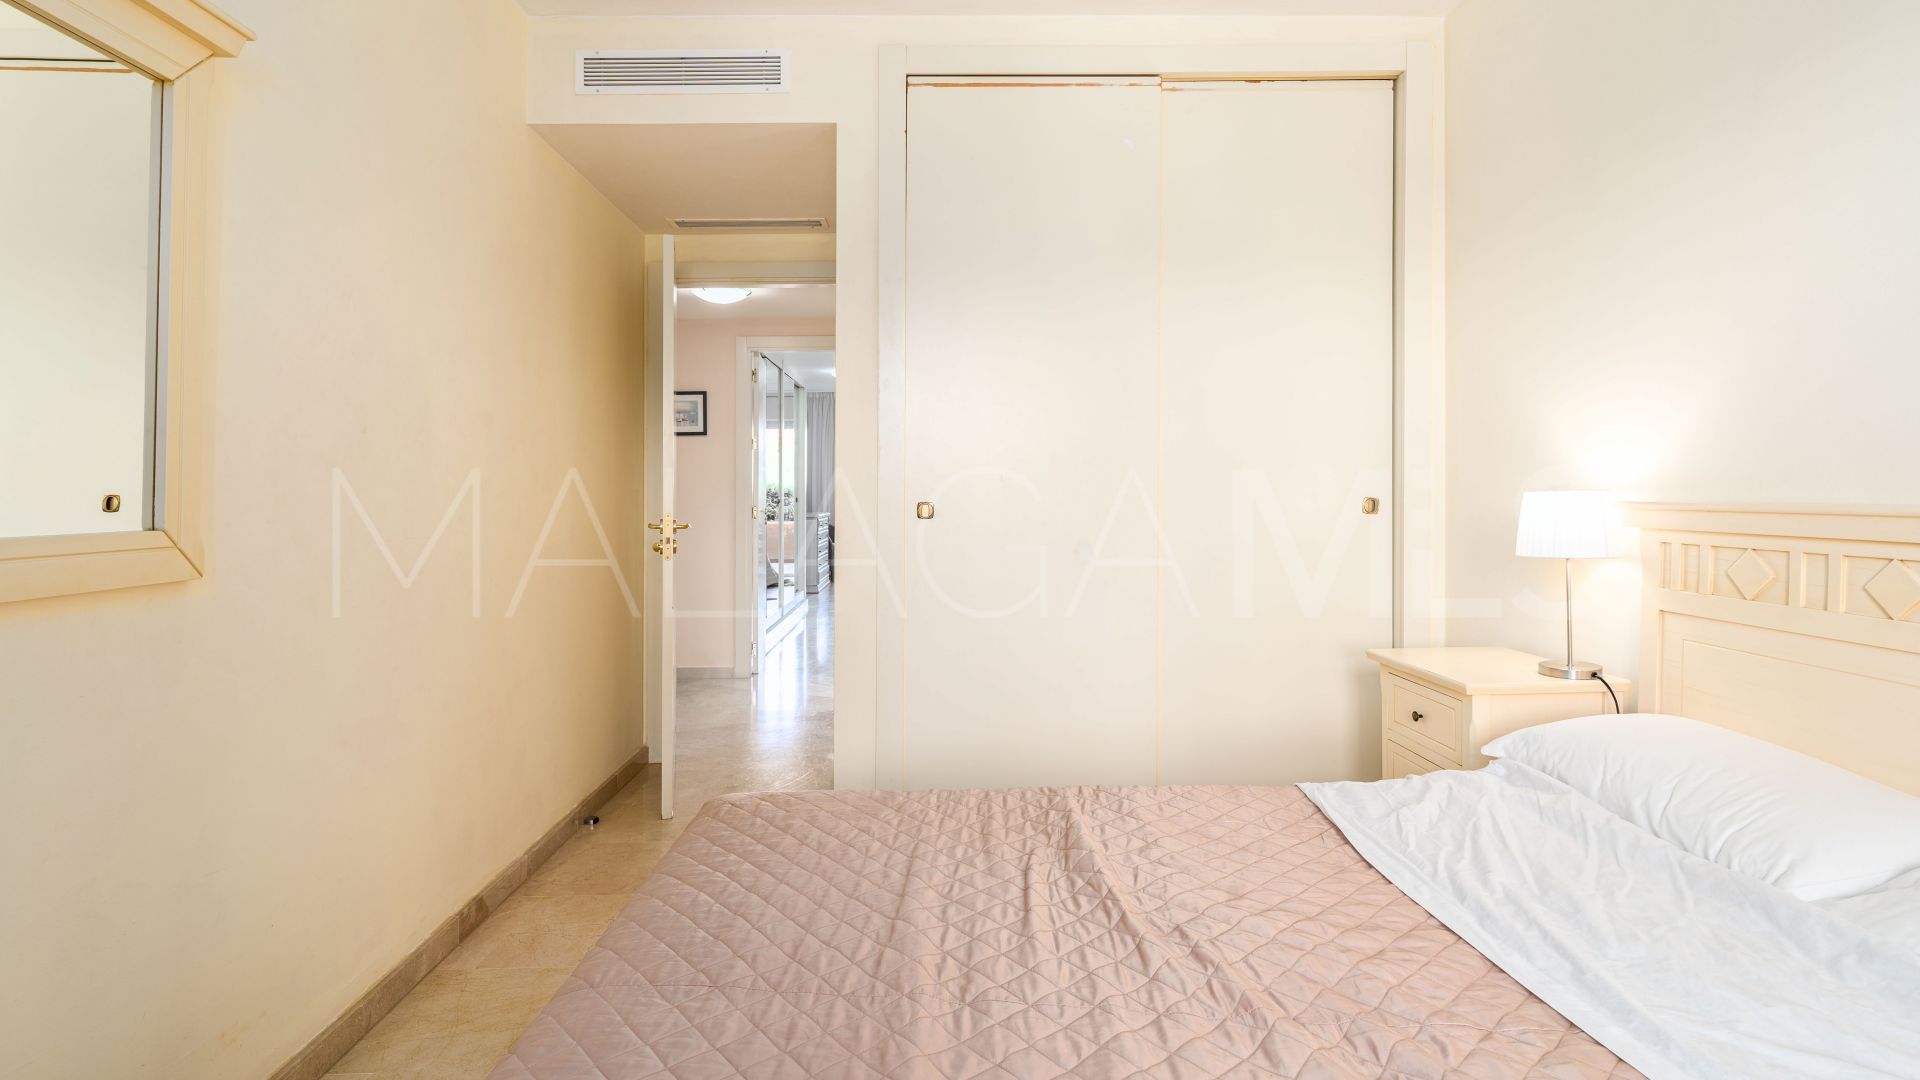 3 bedrooms ground floor apartment in La Duquesa for sale